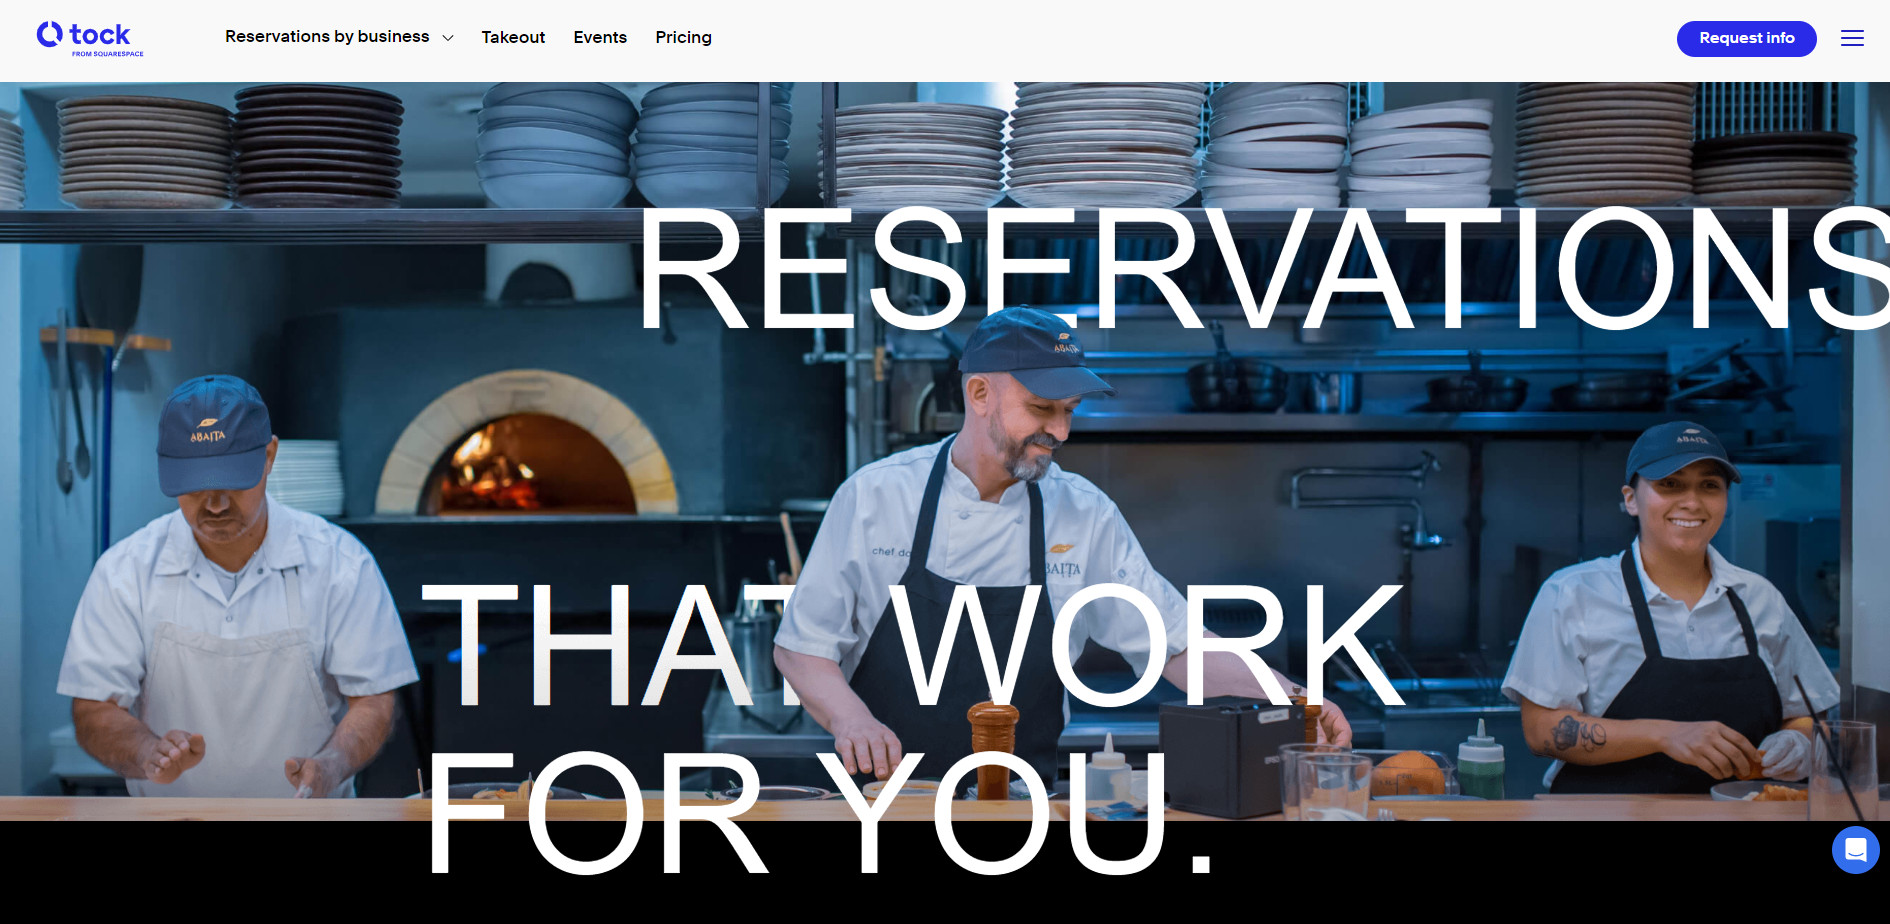 restaurant software - tock website